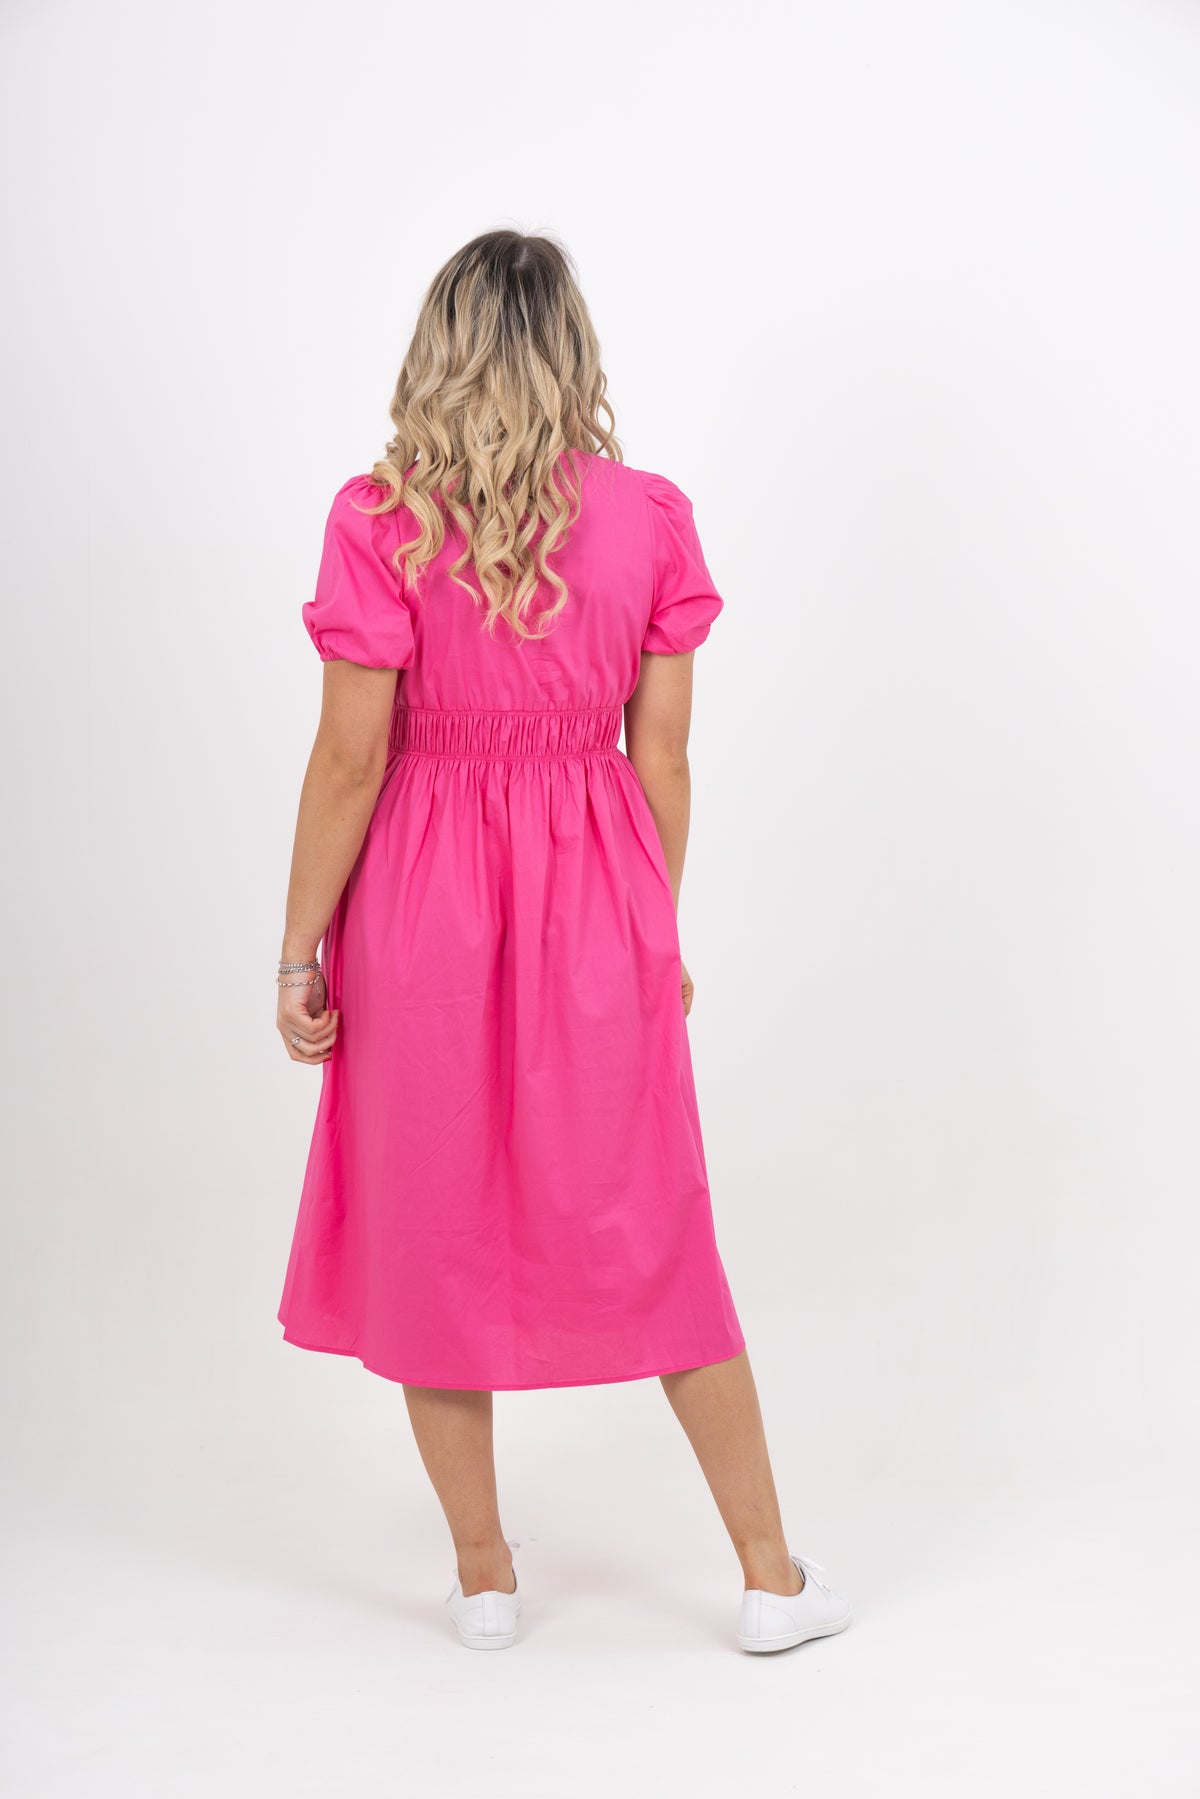 Ashley Dress Hot Pink Poplin - EXCLUSIVE TO MINT